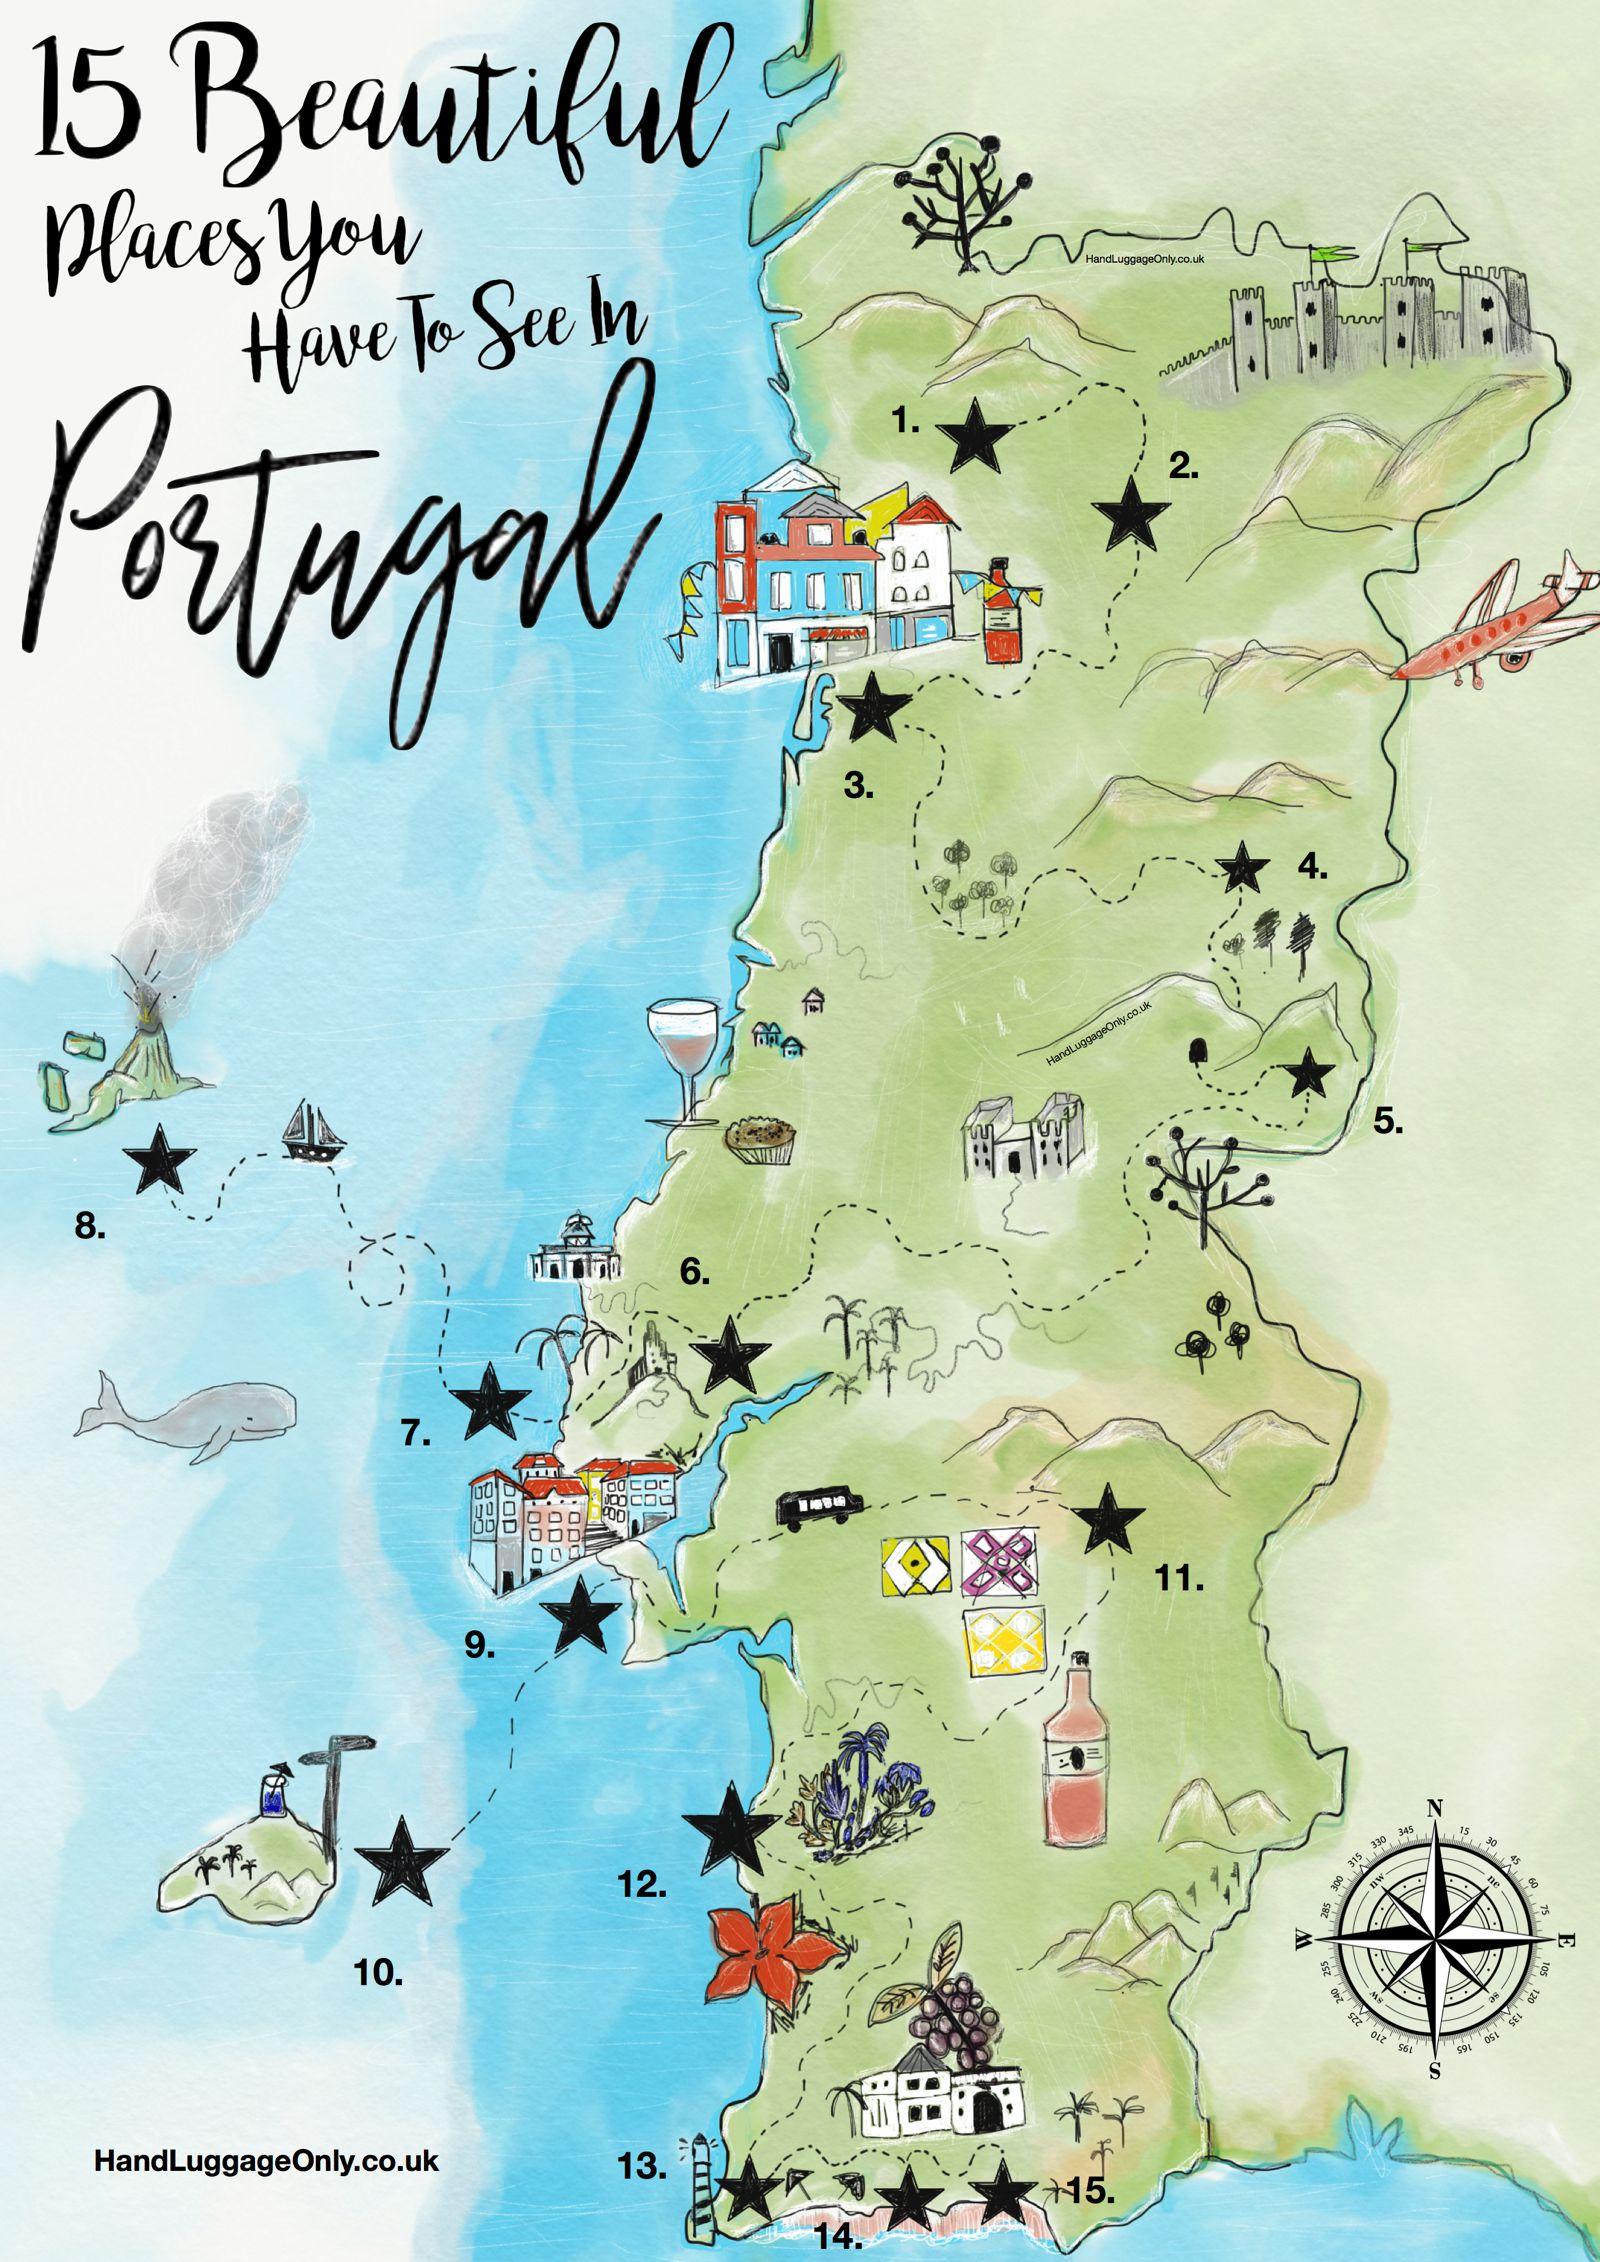 Viver Portugal Tours - Mapa de Portugal Continental! Portugal o